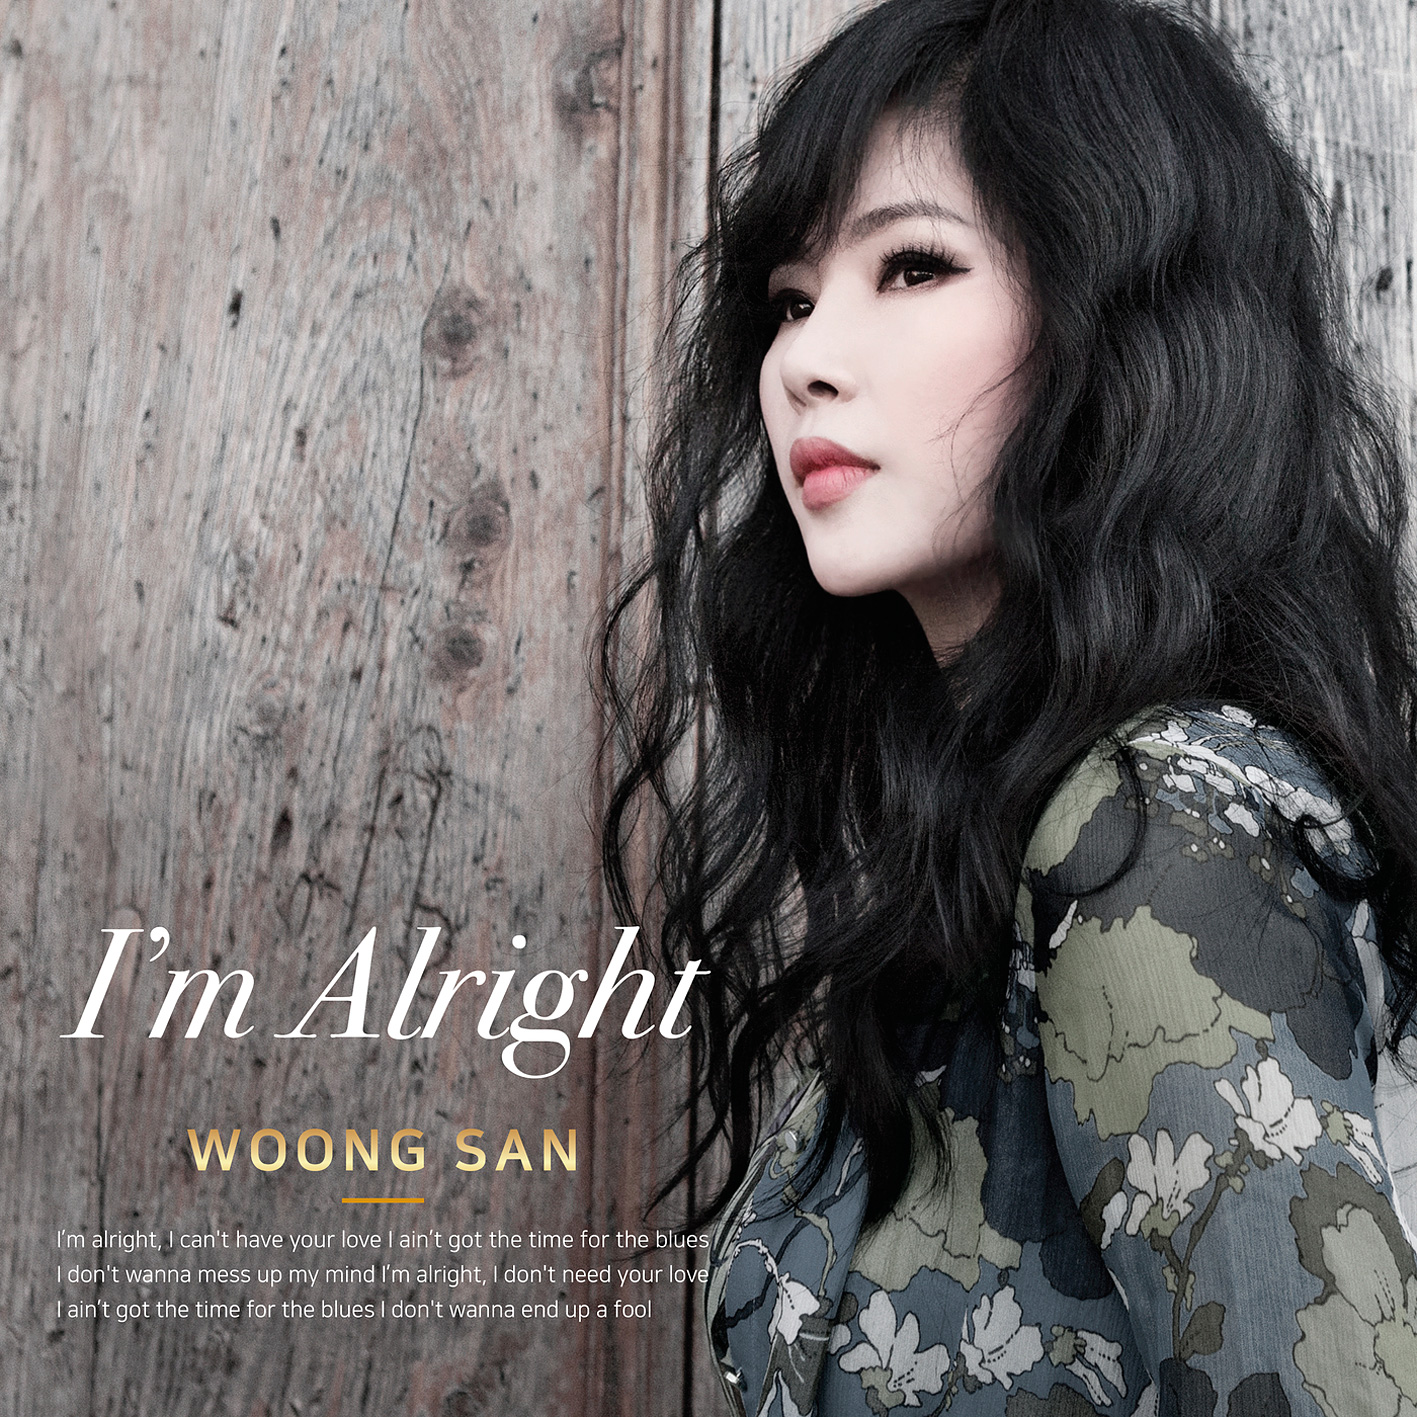 Woong San - I’m Alright (2018) [HDTracks FLAC 24bit/96kHz]